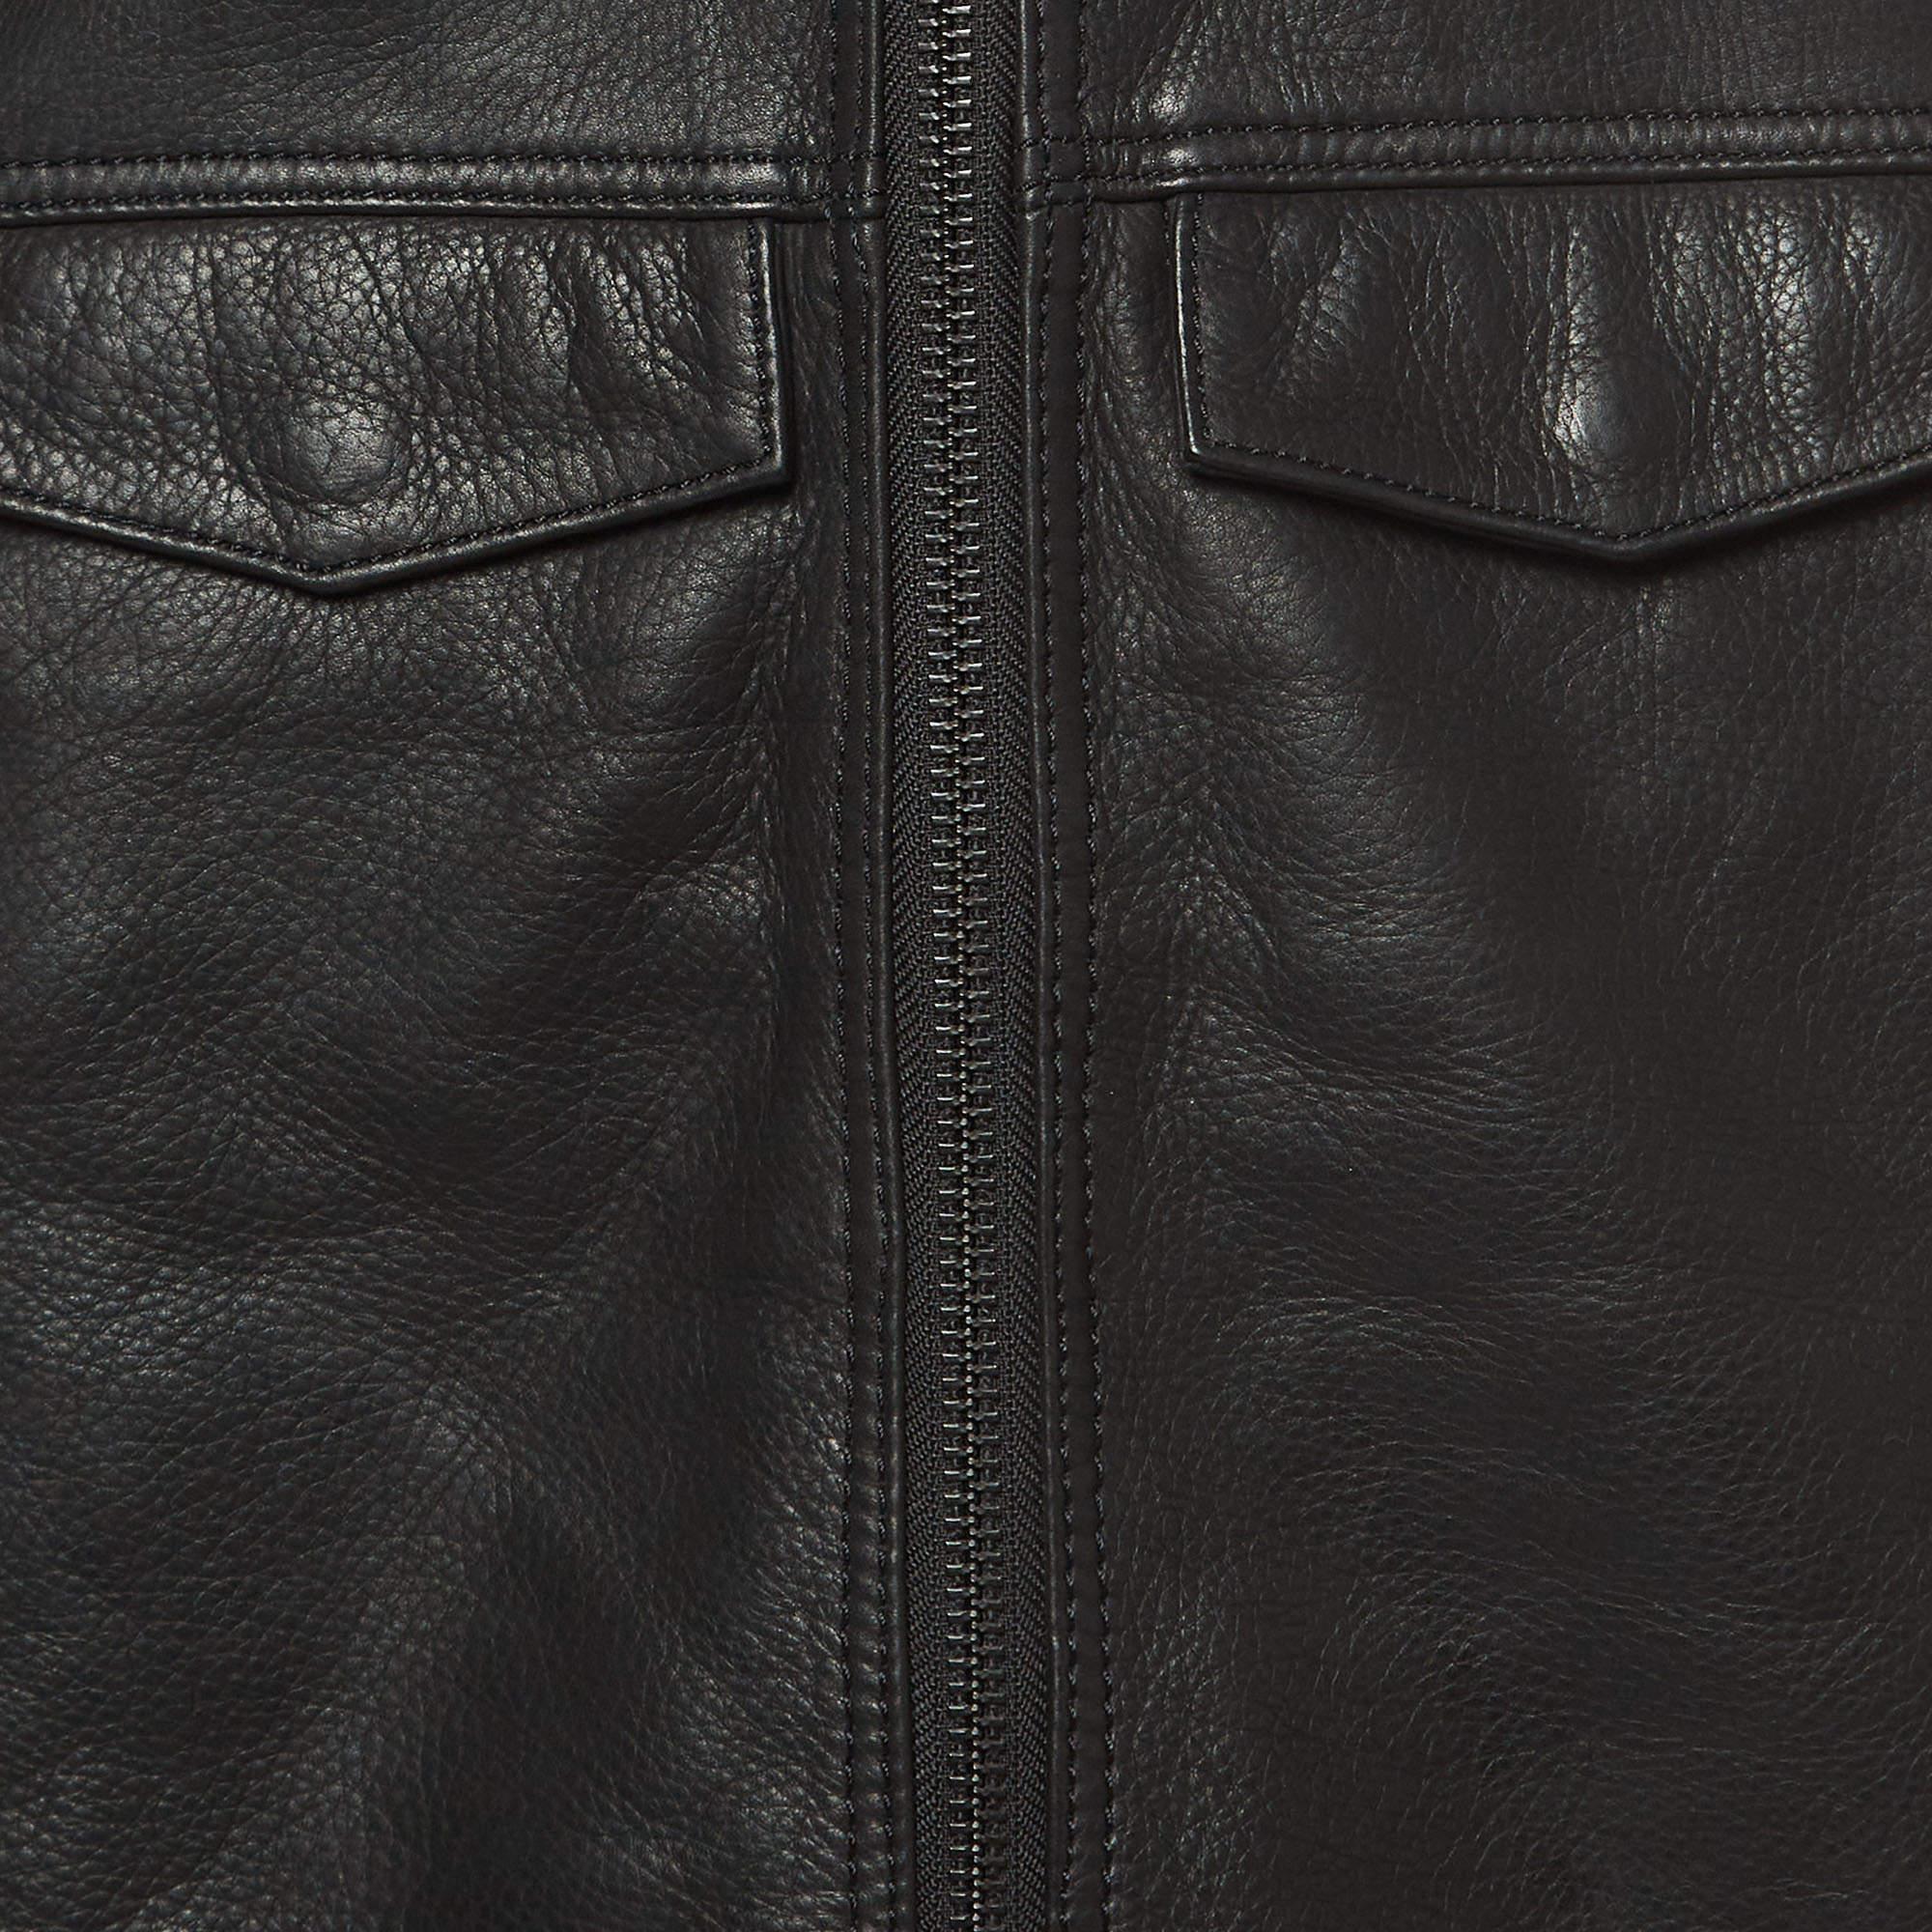 Zadig & Voltaire Black Leather Zip Front Jacket XS In Excellent Condition For Sale In Dubai, Al Qouz 2